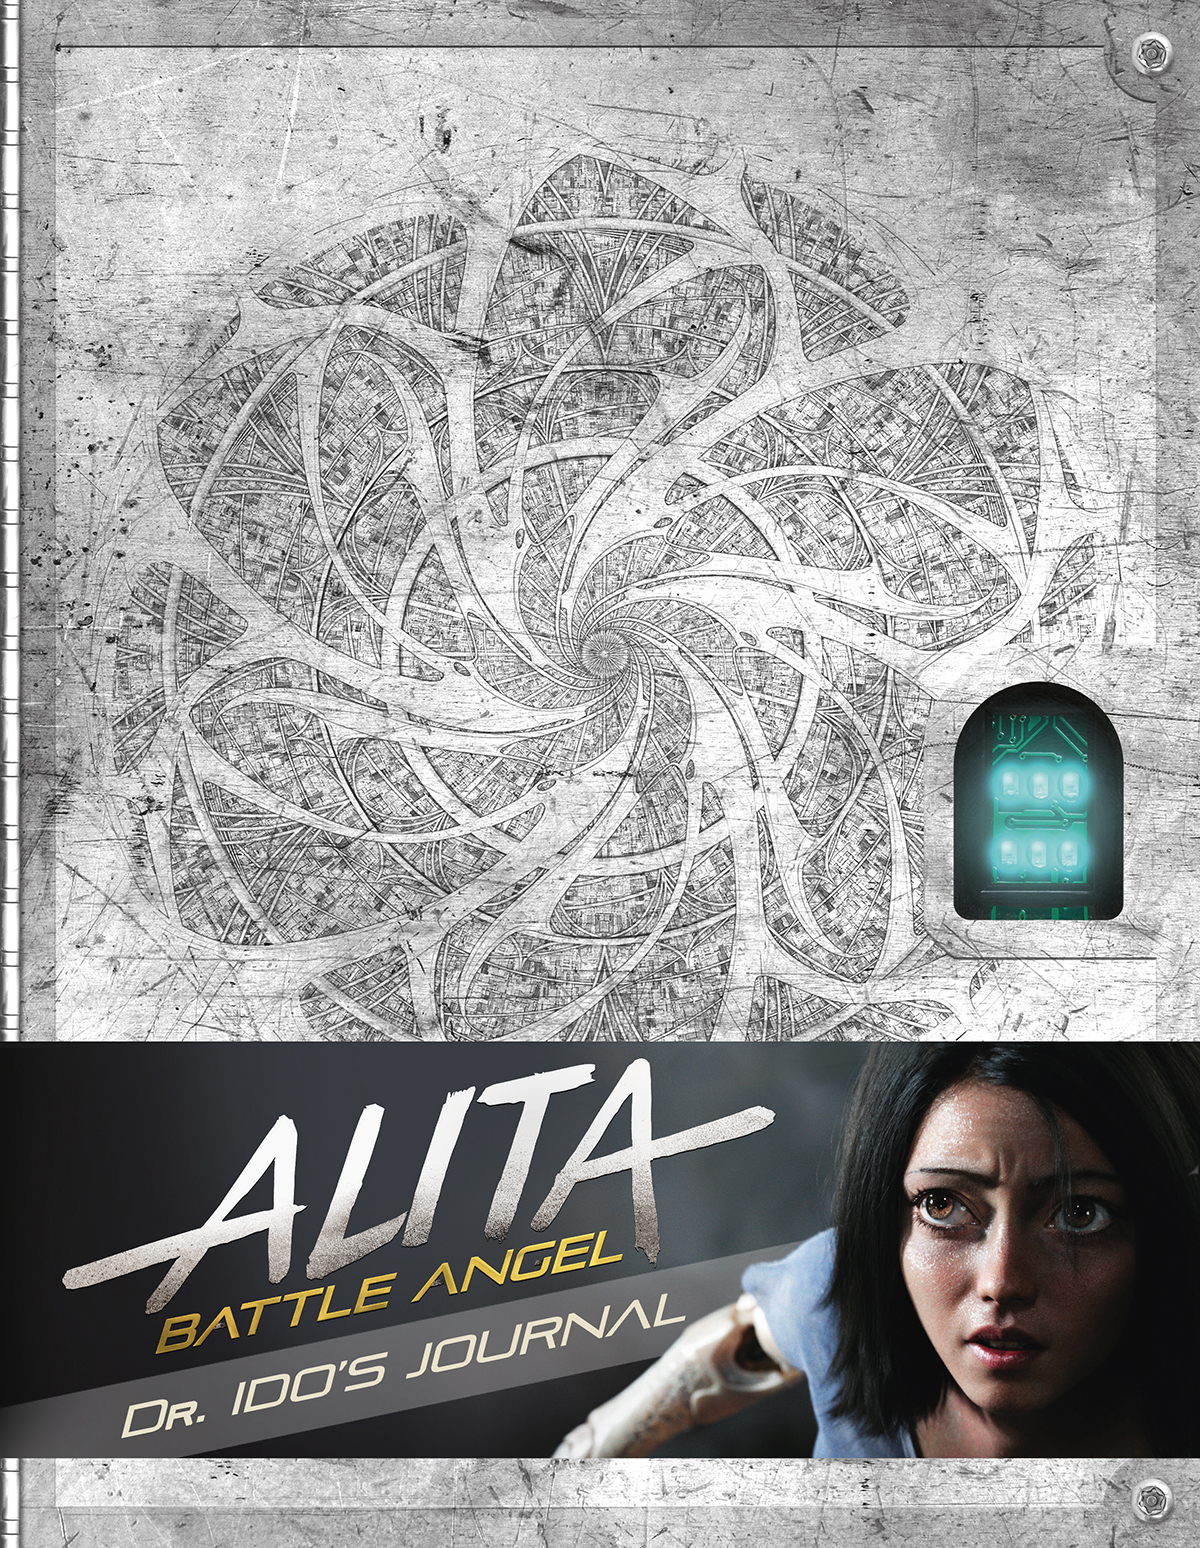 Alita: Battle Angel Merchandise